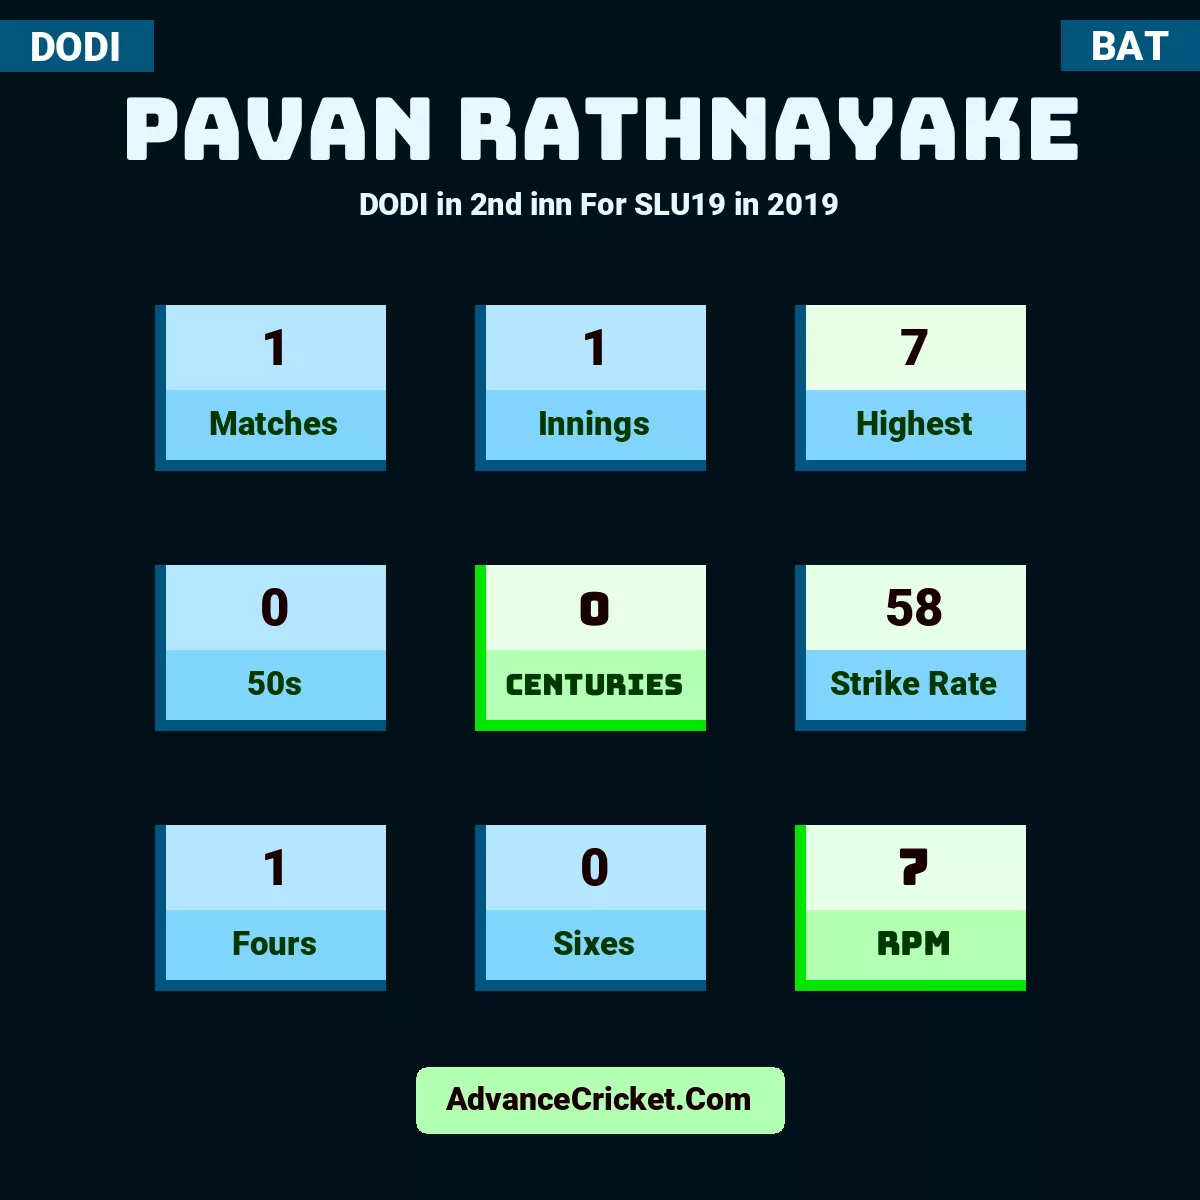 Pavan Rathnayake DODI  in 2nd inn For SLU19 in 2019, Pavan Rathnayake played 1 matches, scored 7 runs as highest, 0 half-centuries, and 0 centuries, with a strike rate of 58. P.Rathnayake hit 1 fours and 0 sixes, with an RPM of 7.